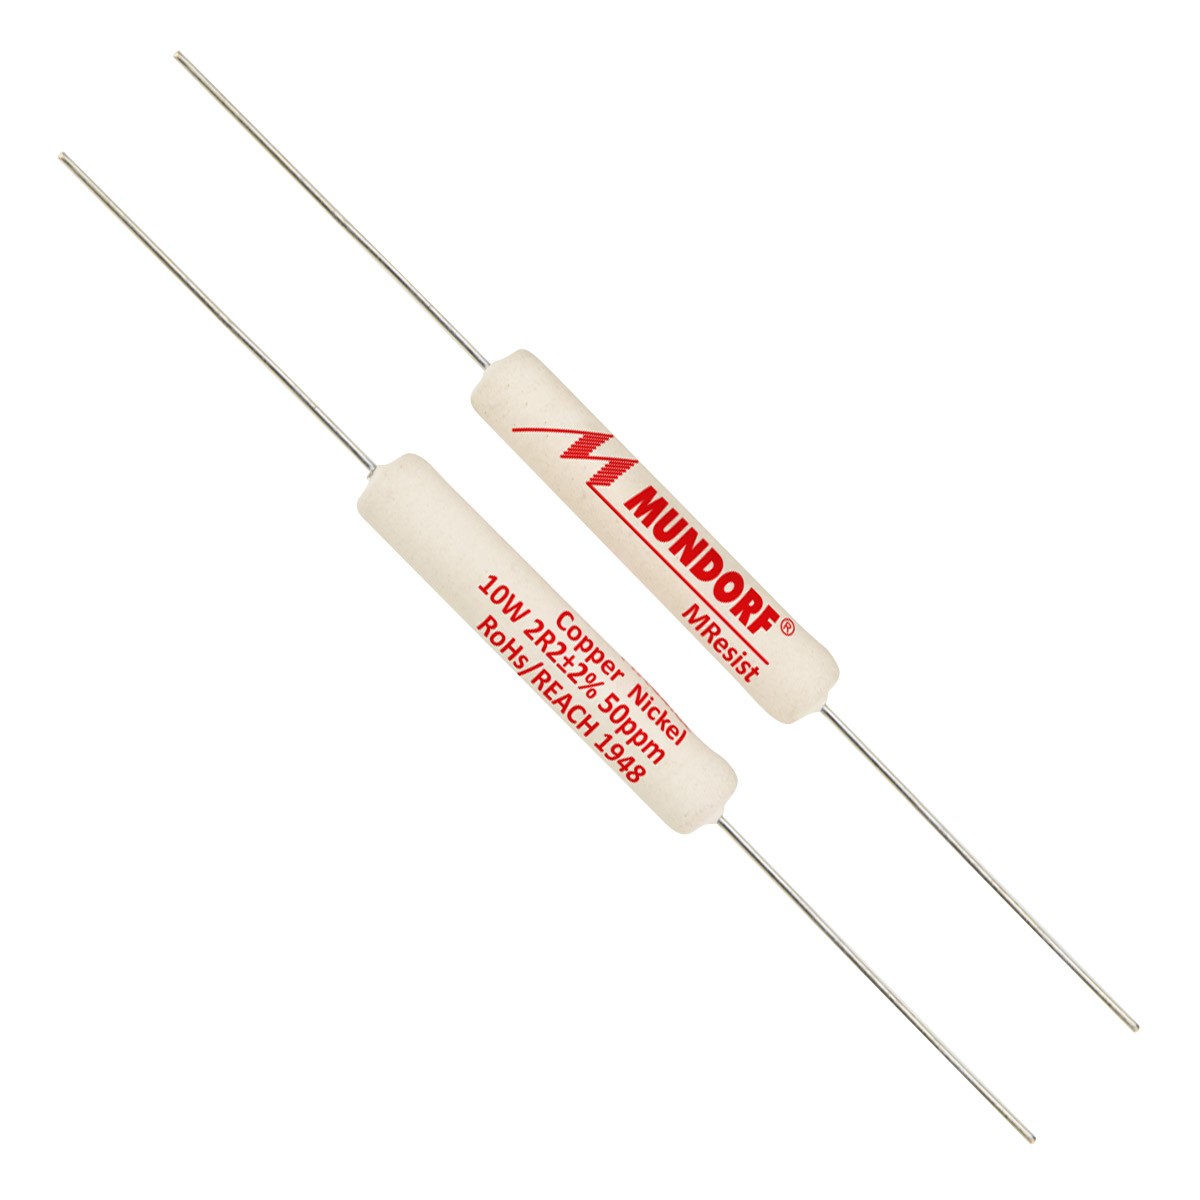 MUNDORF MRESIST CLASSIC Resistor 10W 0.68 Ohm